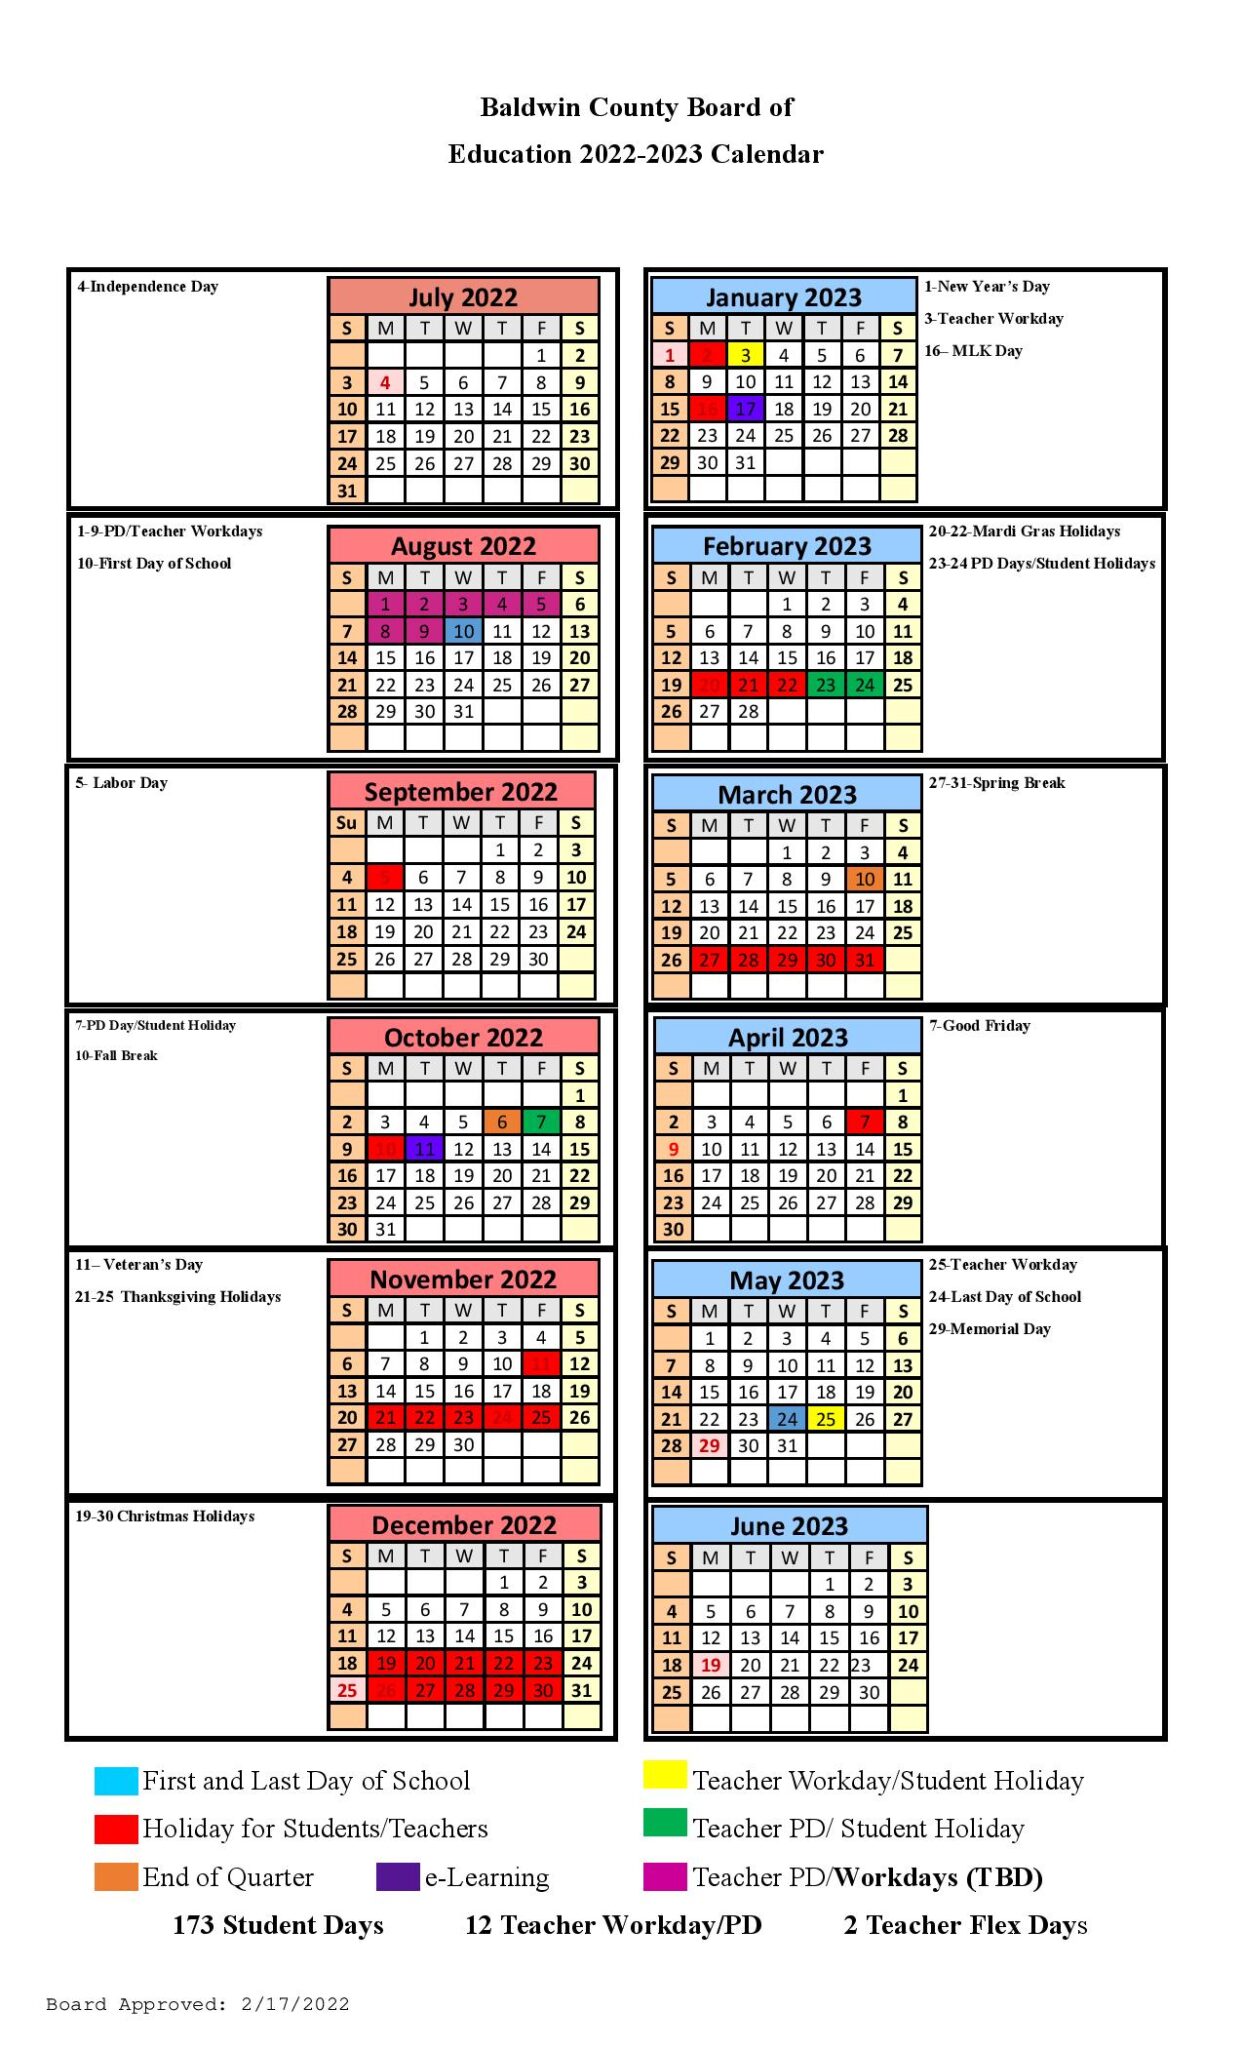 Baldwin County Public Schools Calendar 2022 2023